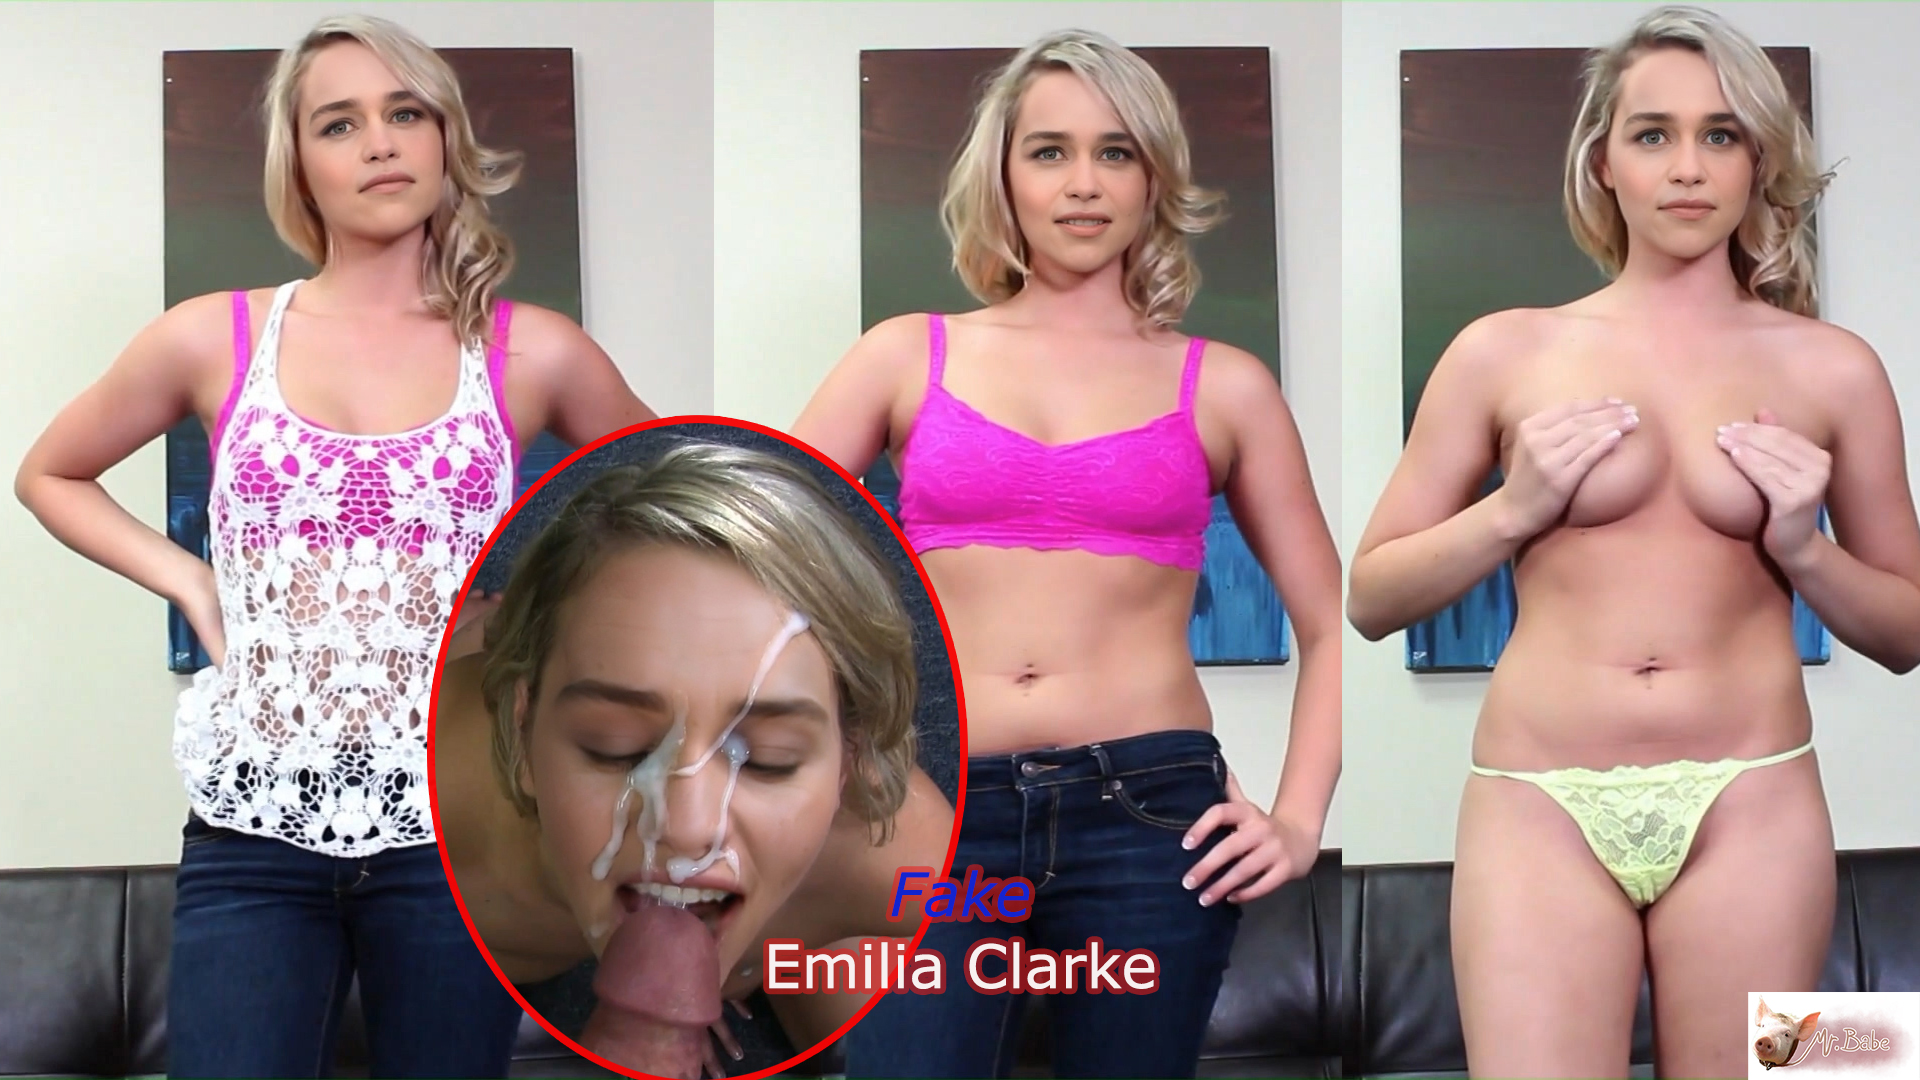 Fake Emilia Clarke -(trailer) - C1- / Free Download